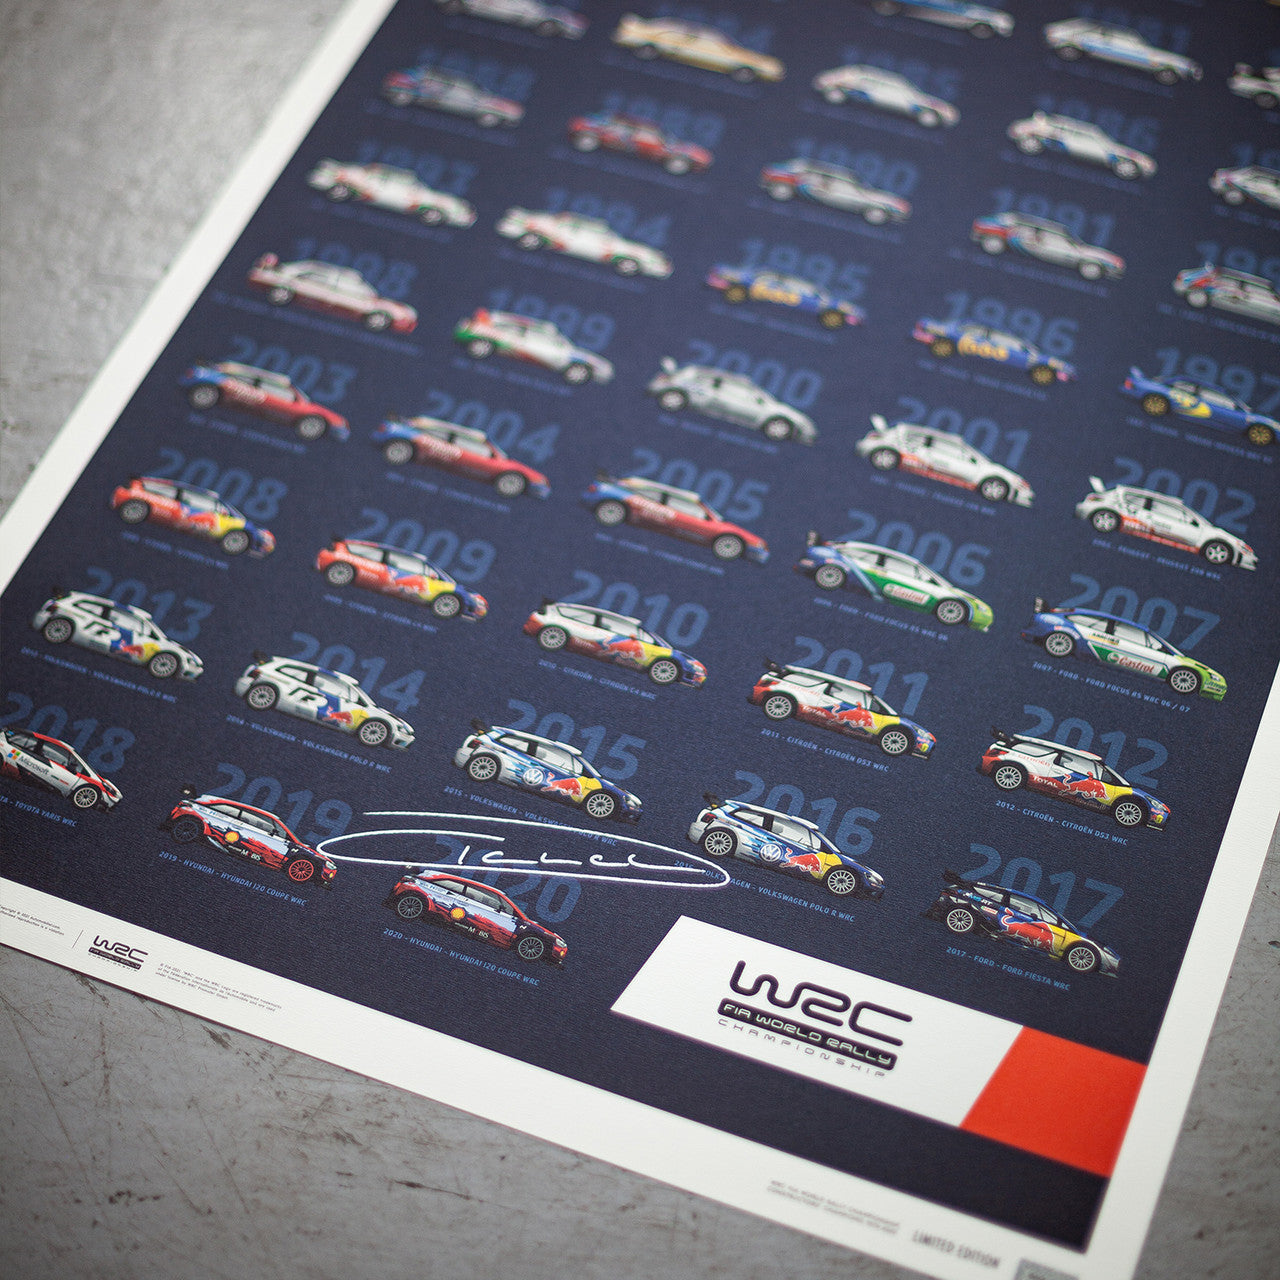 Ott Tänak - WRC Manufacturers’ Champions 1973-2020 - 48th Anniversary | Signed Limited Edition